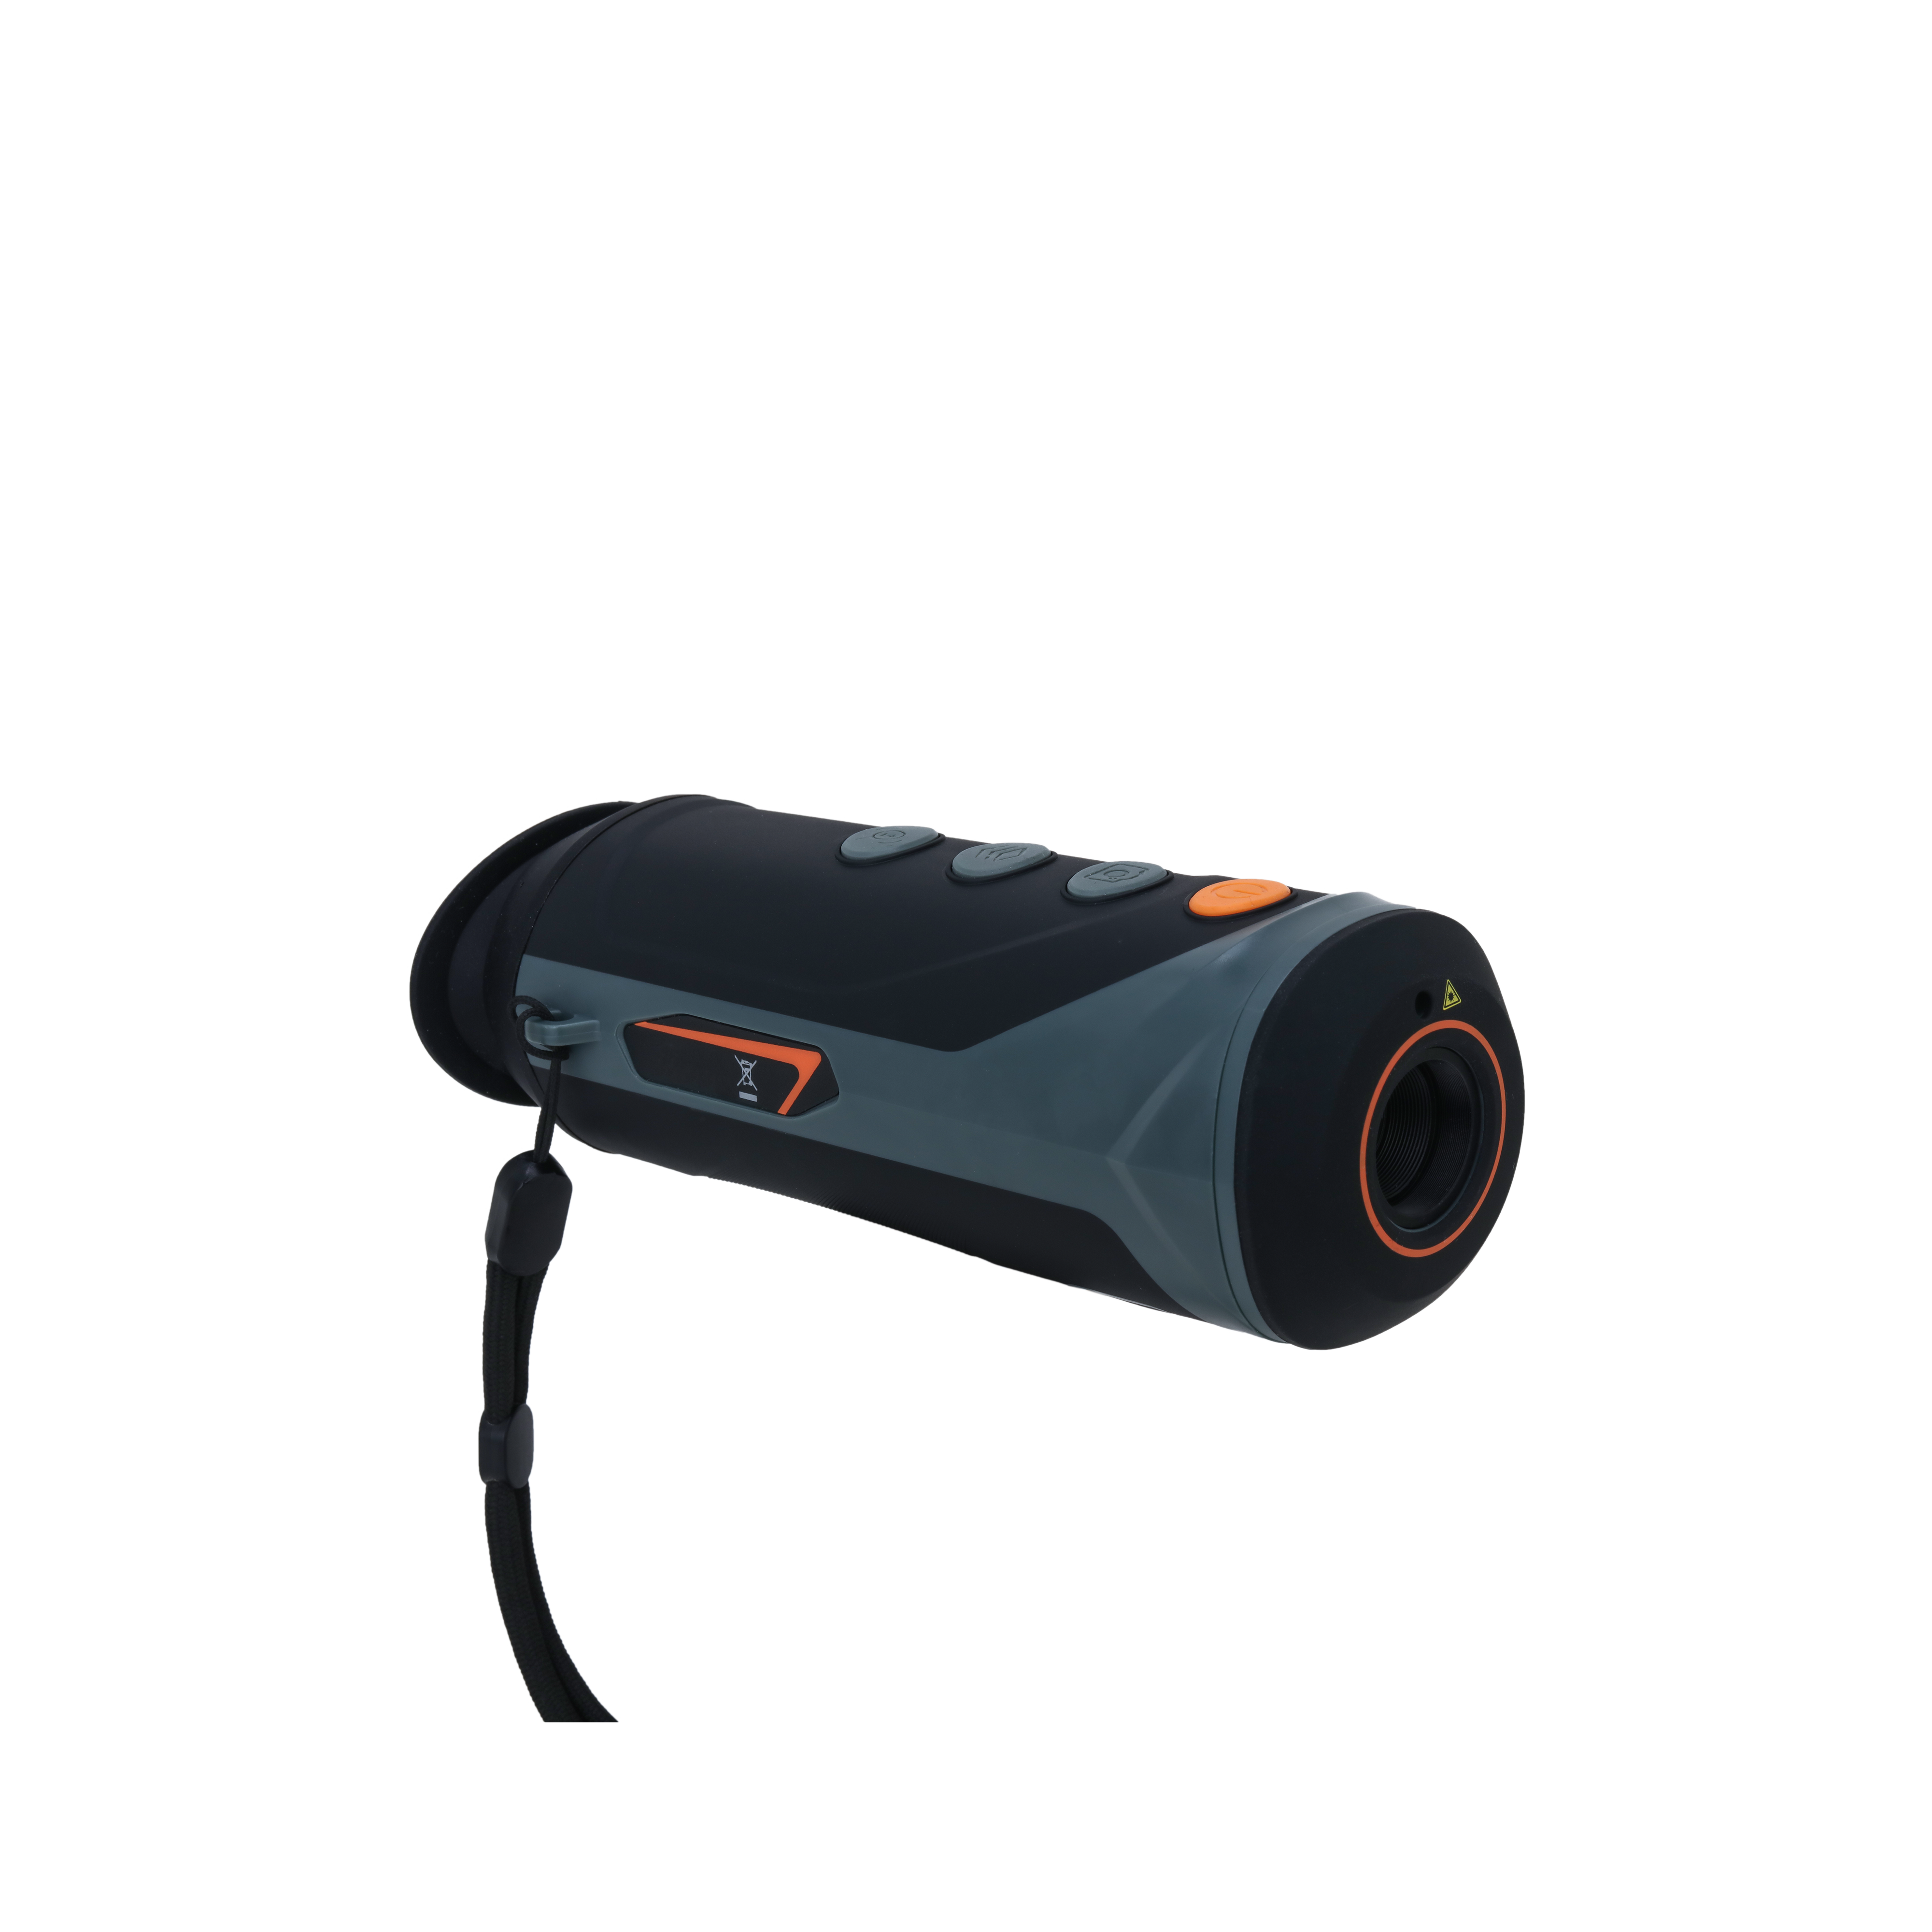 DHI-TPC-M20-B15-G - Dahua Thermal Monocular Camera